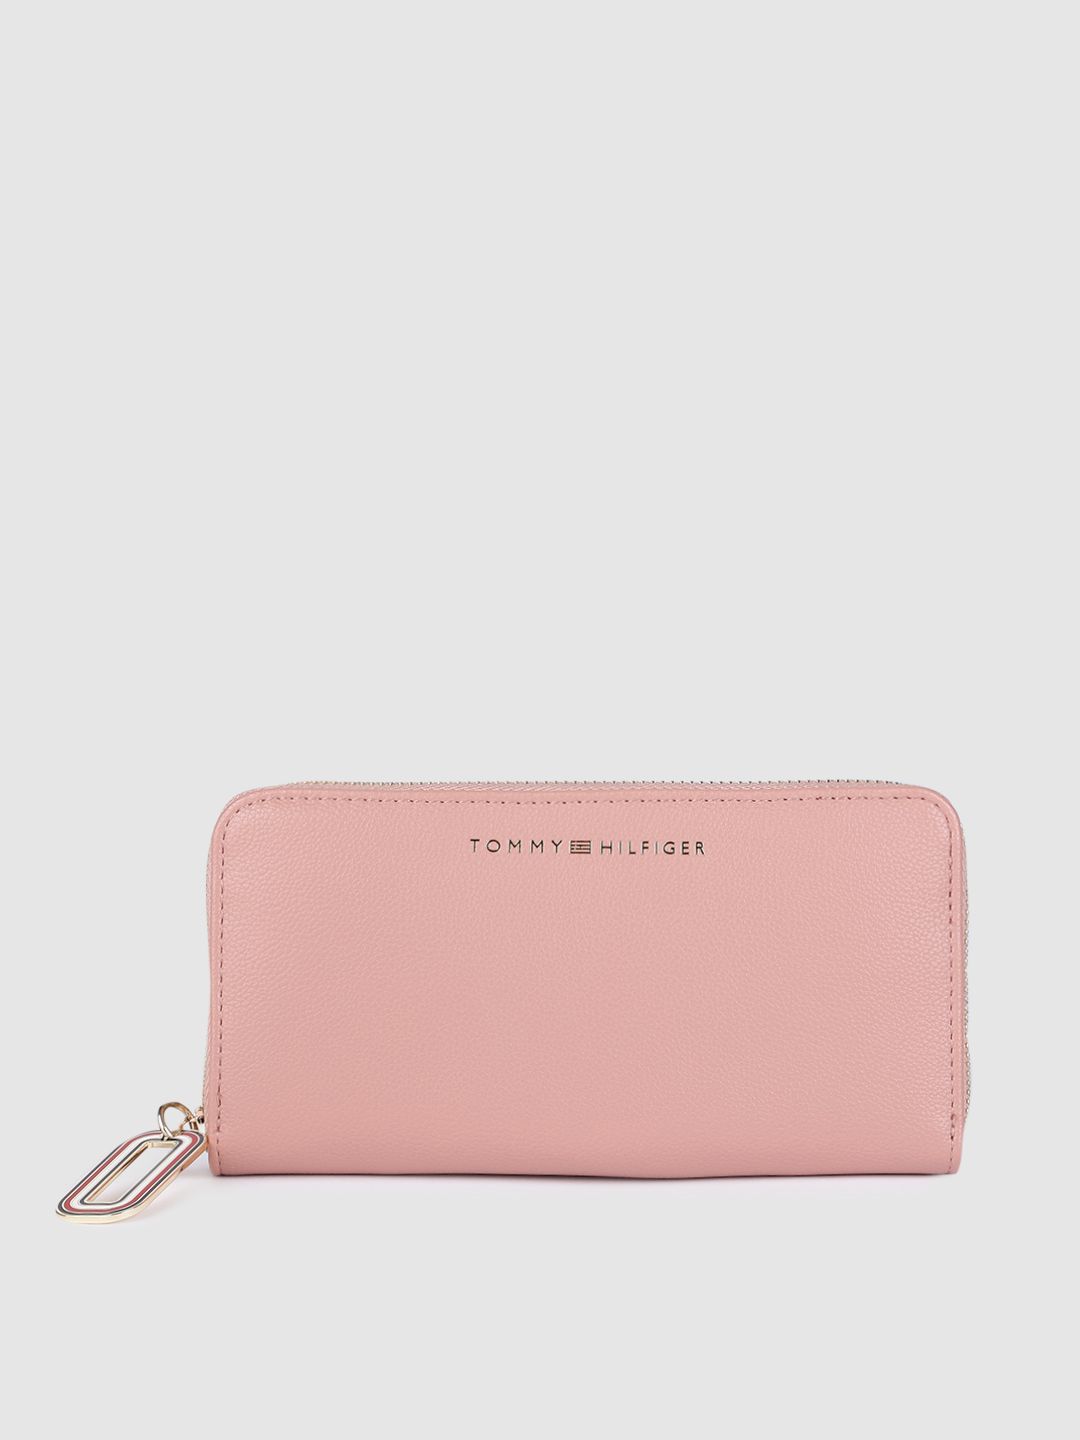 Tommy Hilfiger Women Salmon Pink Solid PU Zip Around Wallet with Brand Logo Tassel Price in India